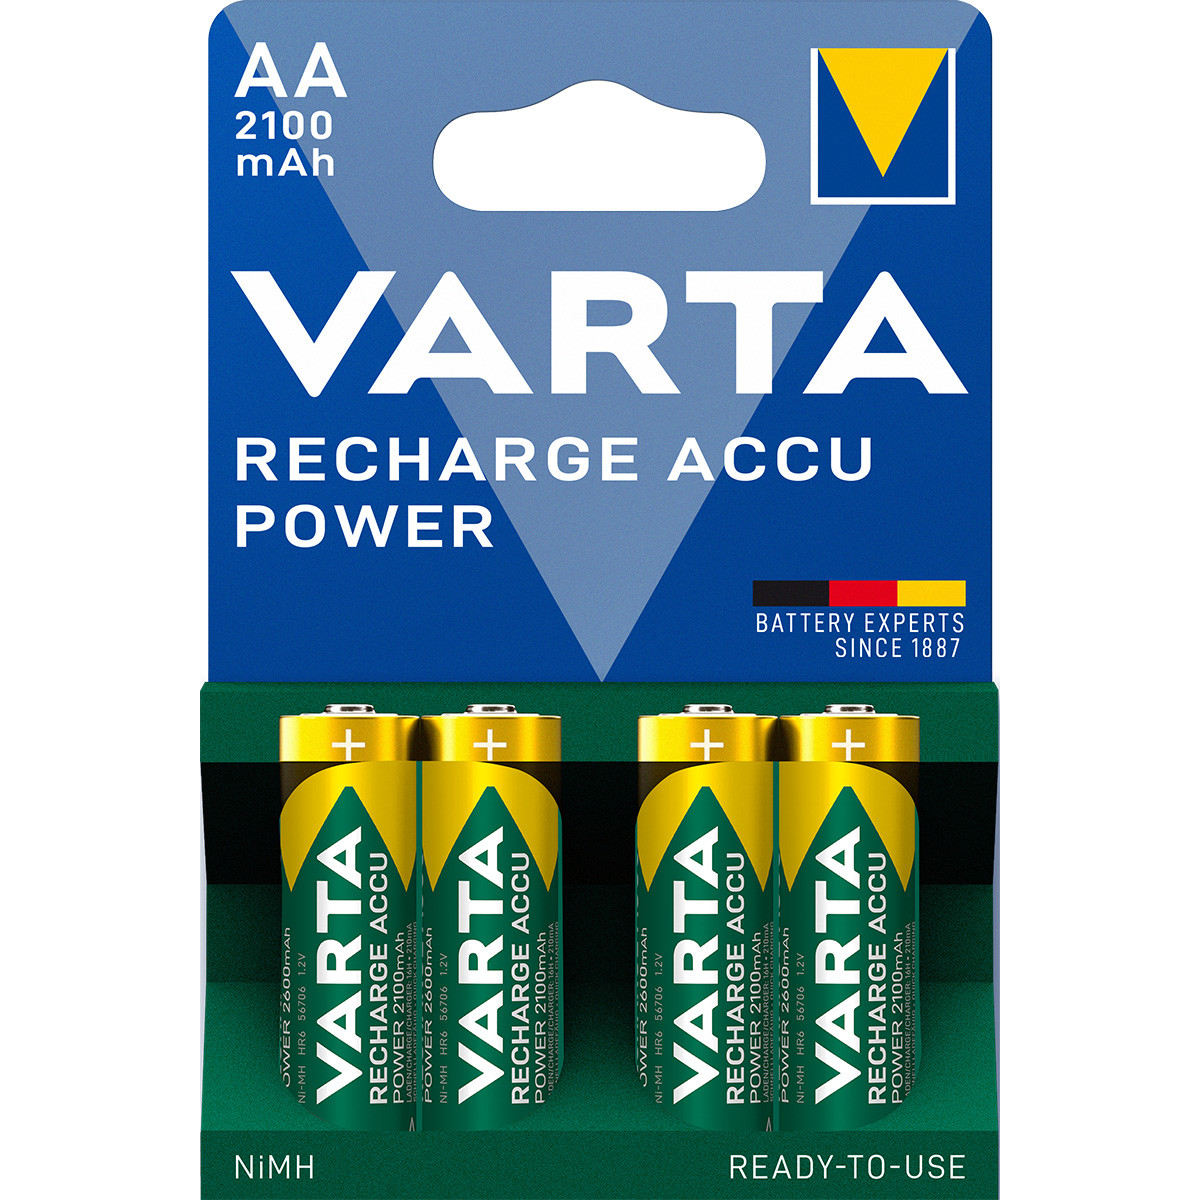 Varta Recharge Accu Power